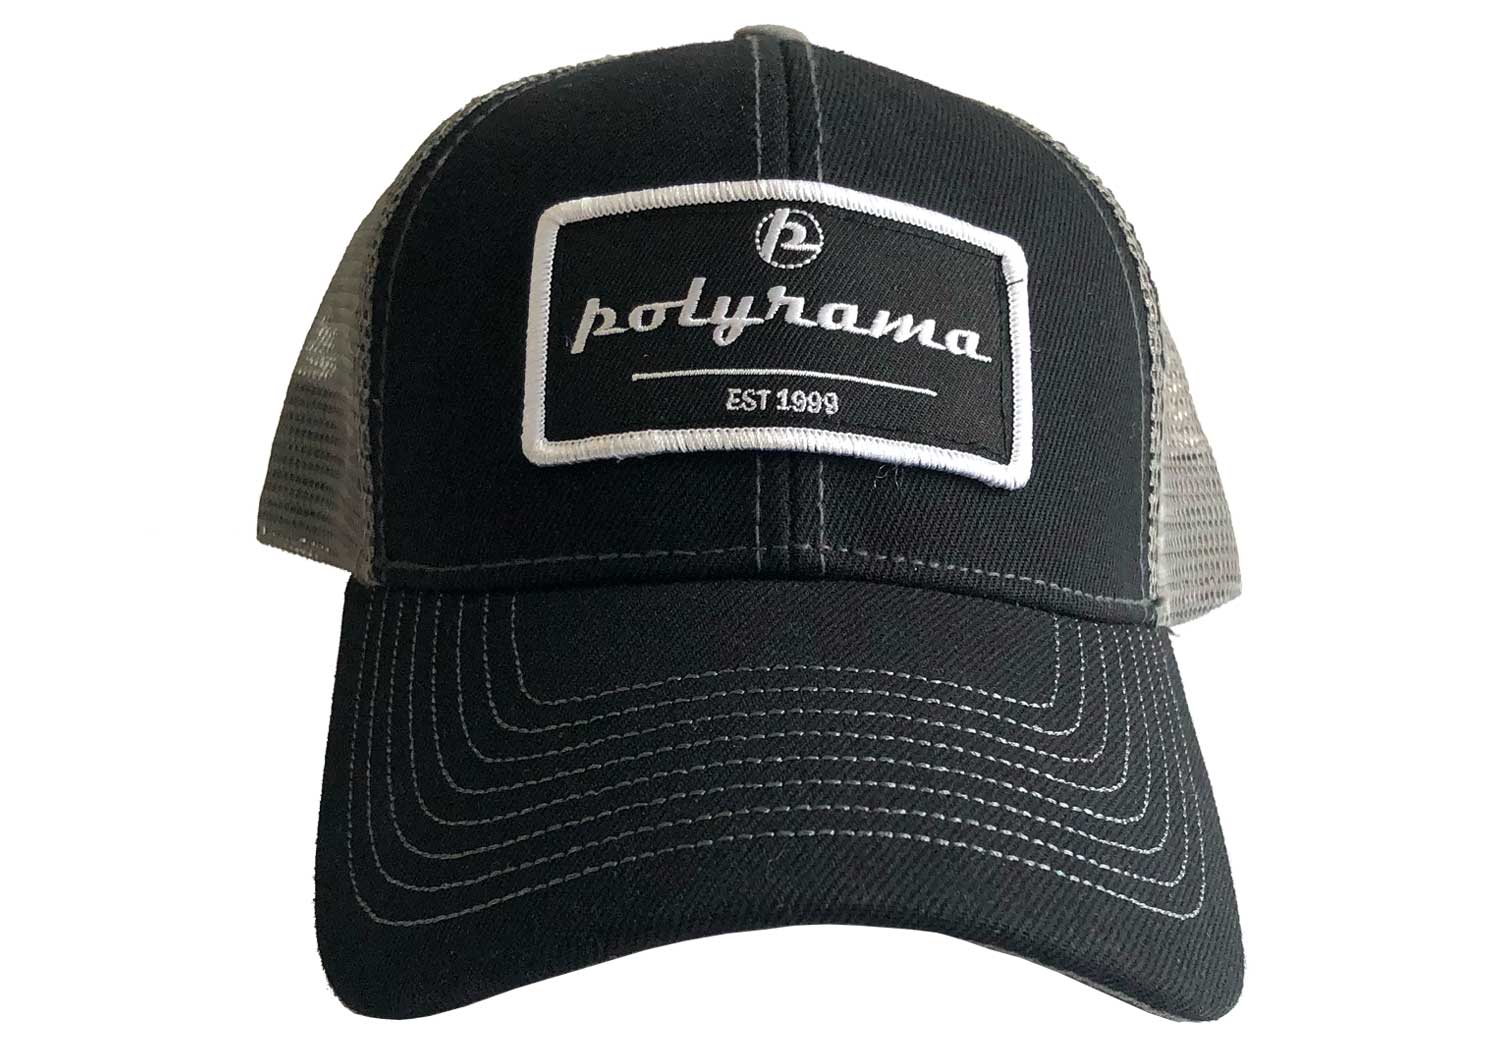 Polyrama Trucker Hat